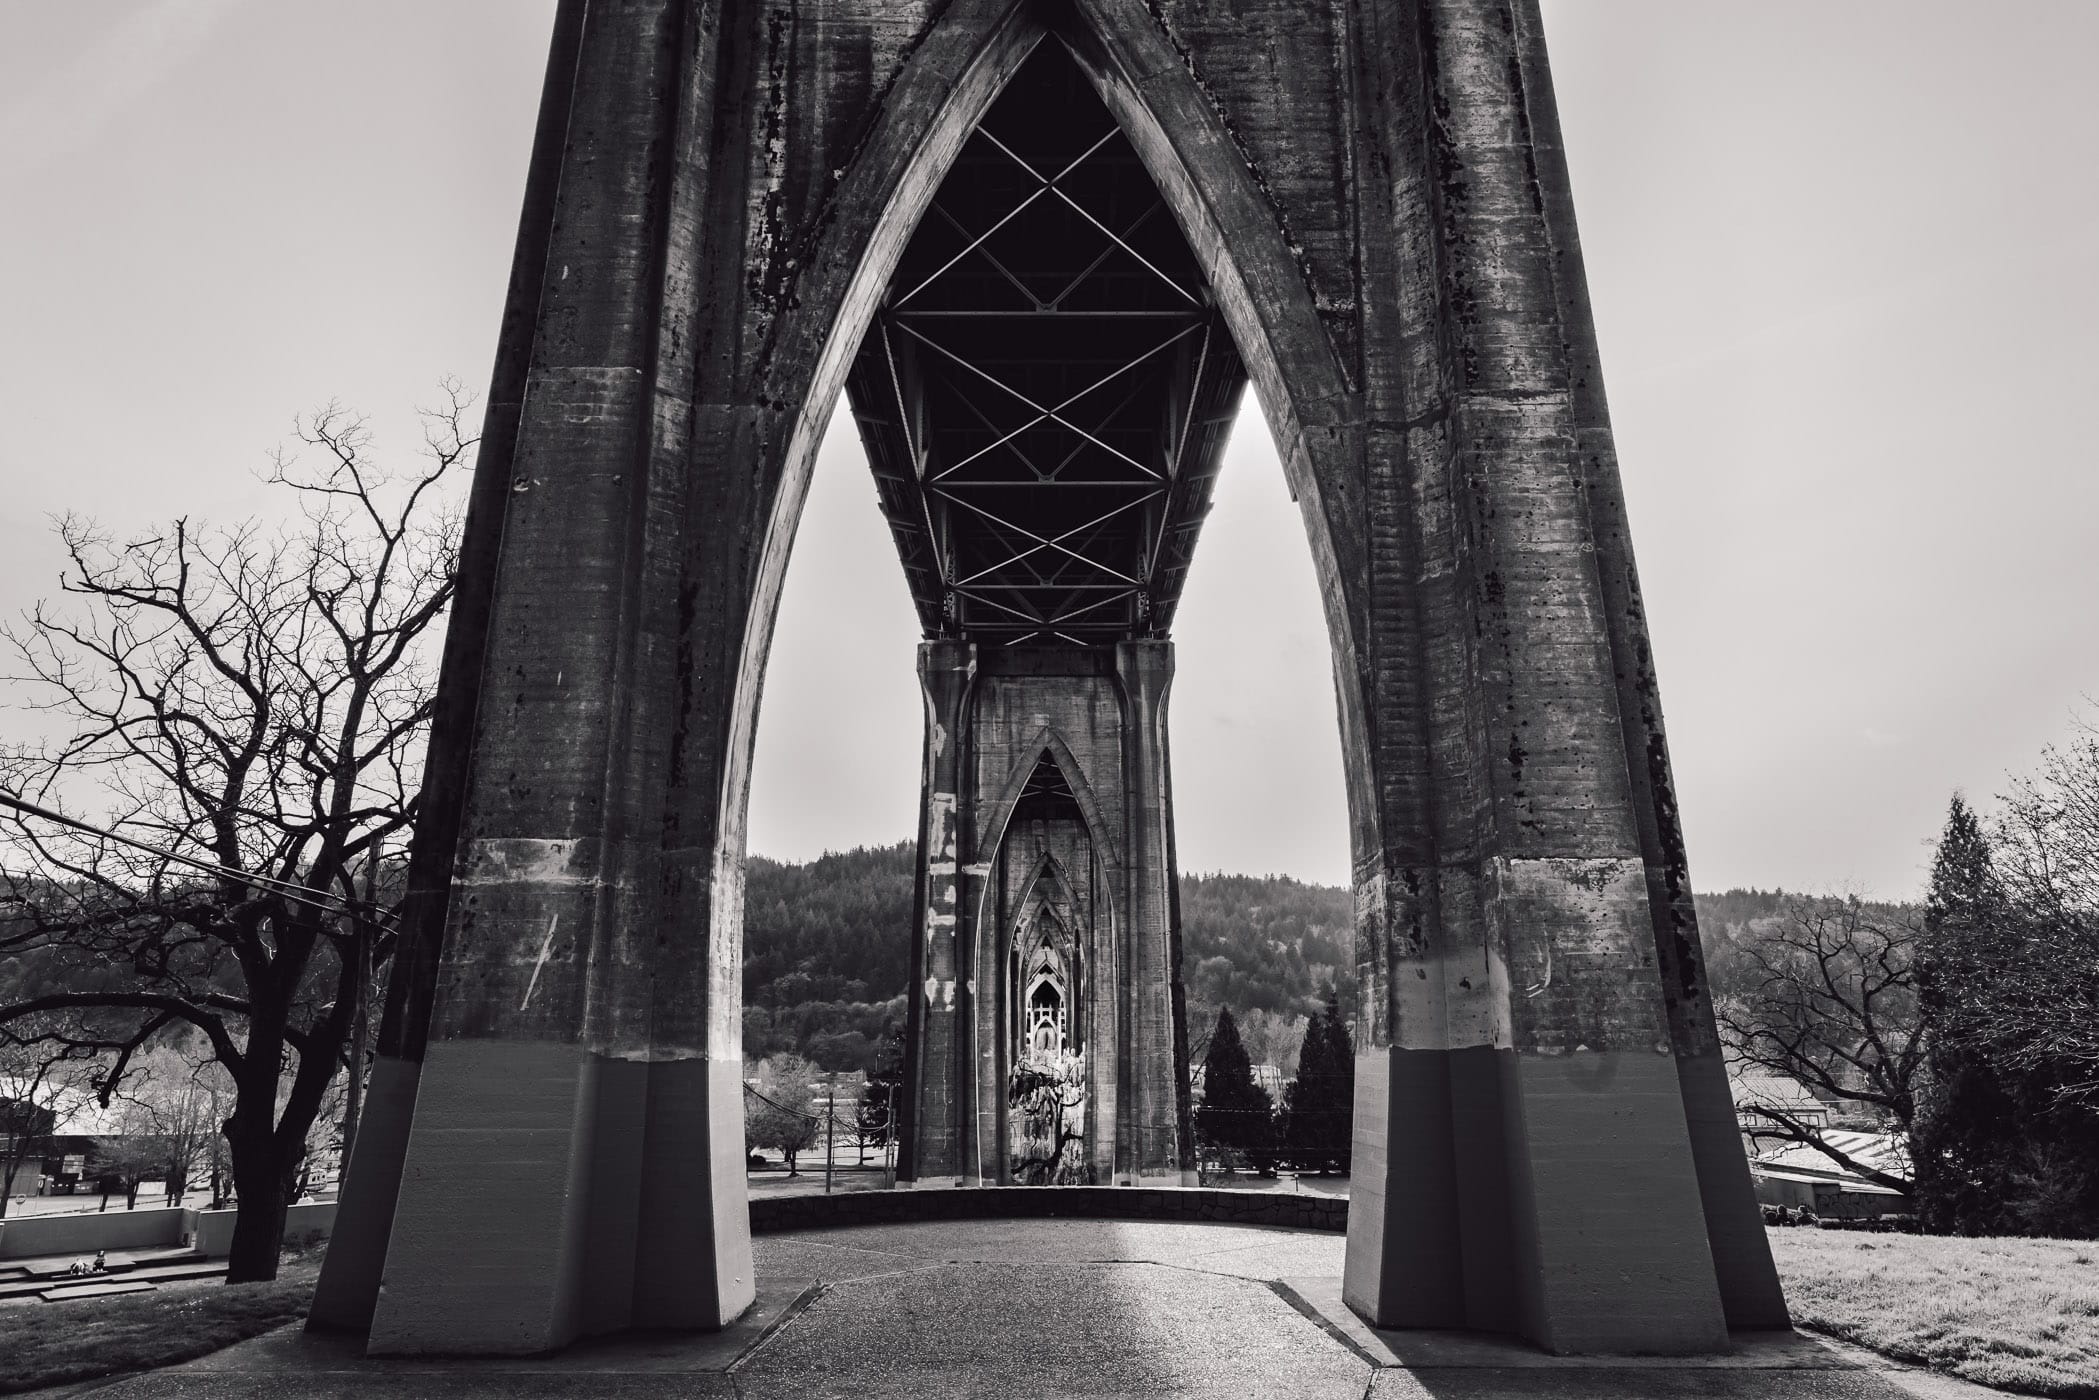 The St. Johns Bridge spans the Willamette River in Portland, Oregon.